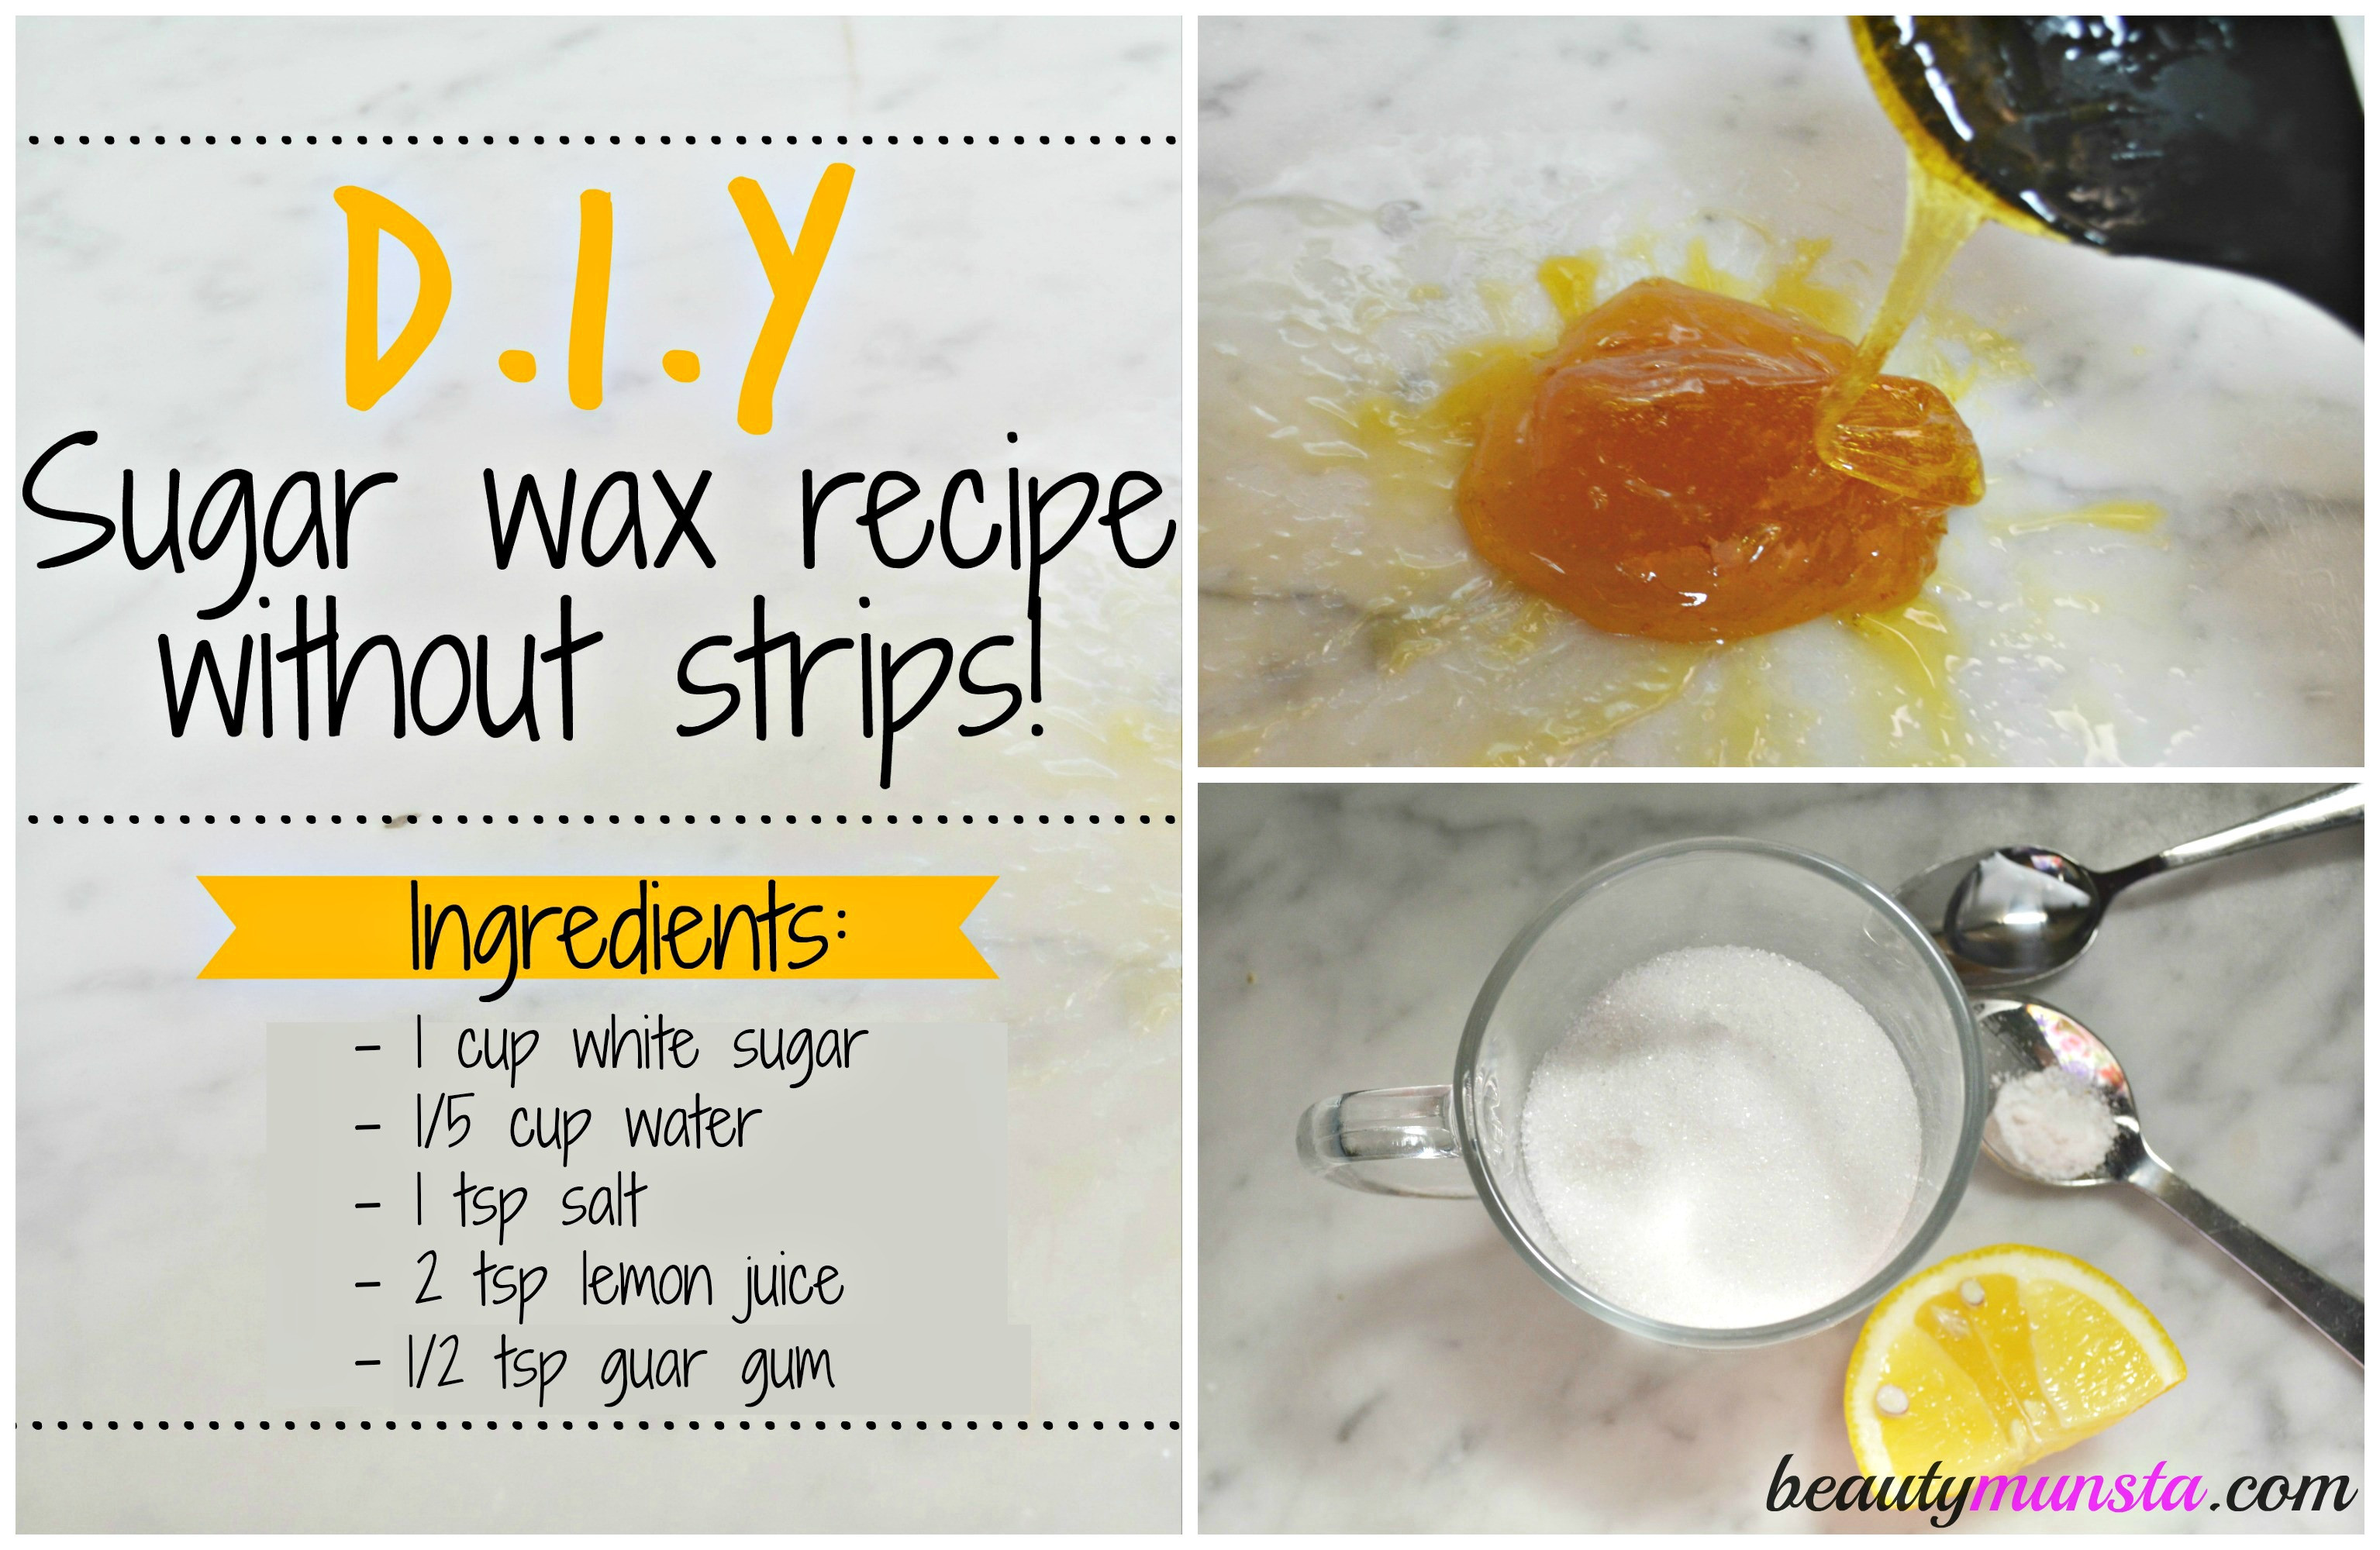 Best ideas about Sugar Wax DIY
. Save or Pin DIY Sugar Wax Recipe without Strips beautymunsta Now.